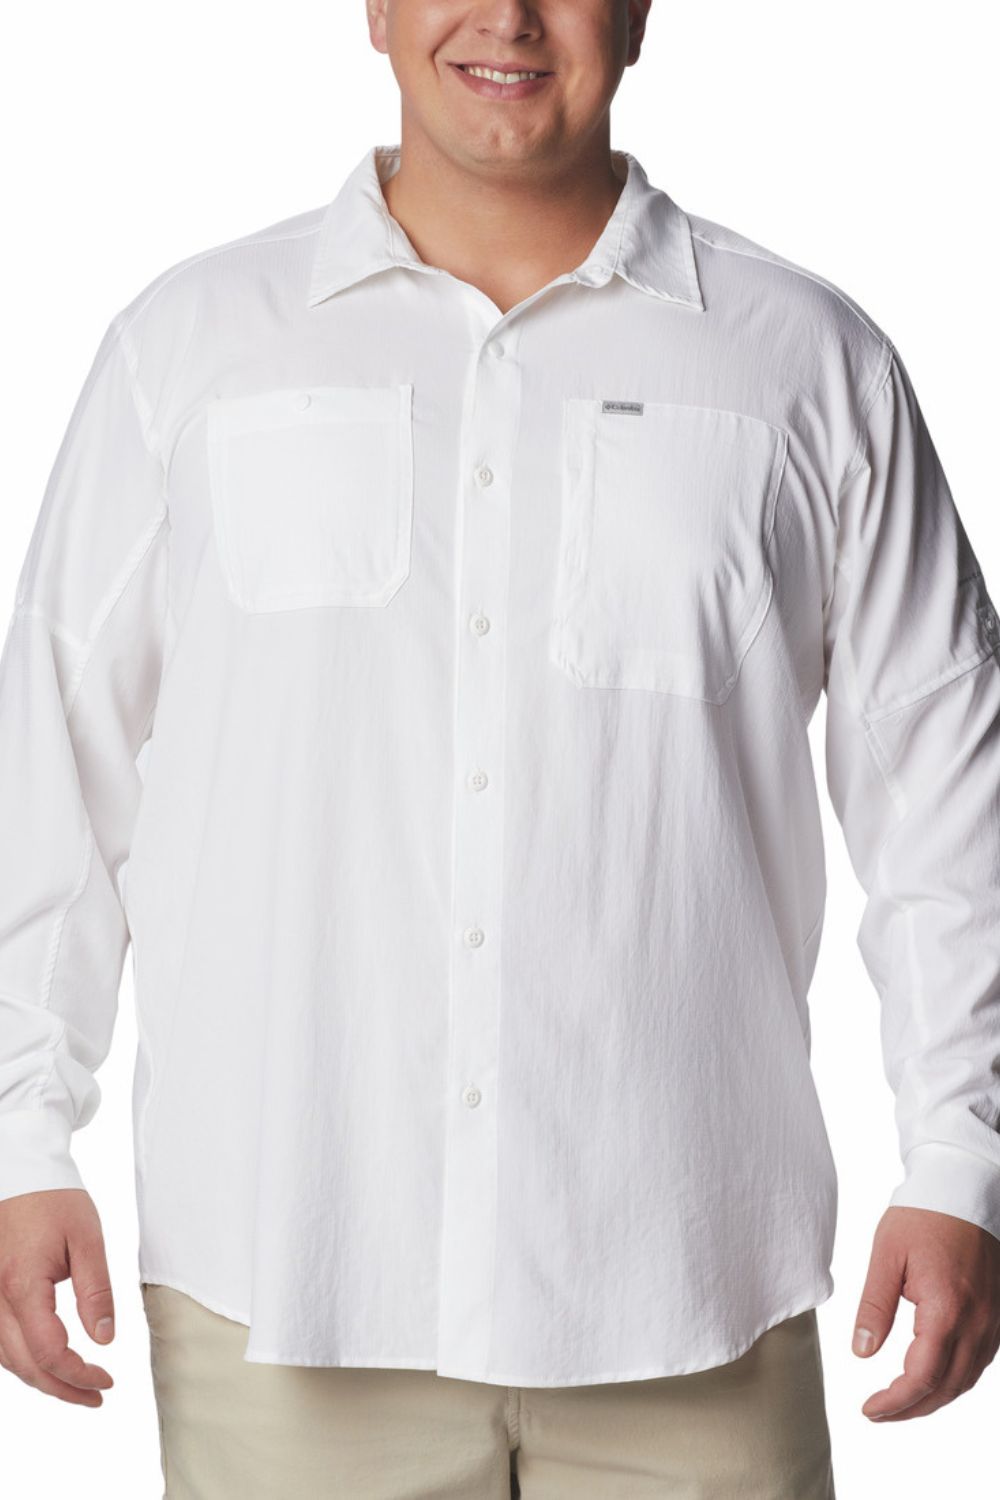 Men's Long Sleeves UV Shirt UPF 50+ for sun protection Columbia